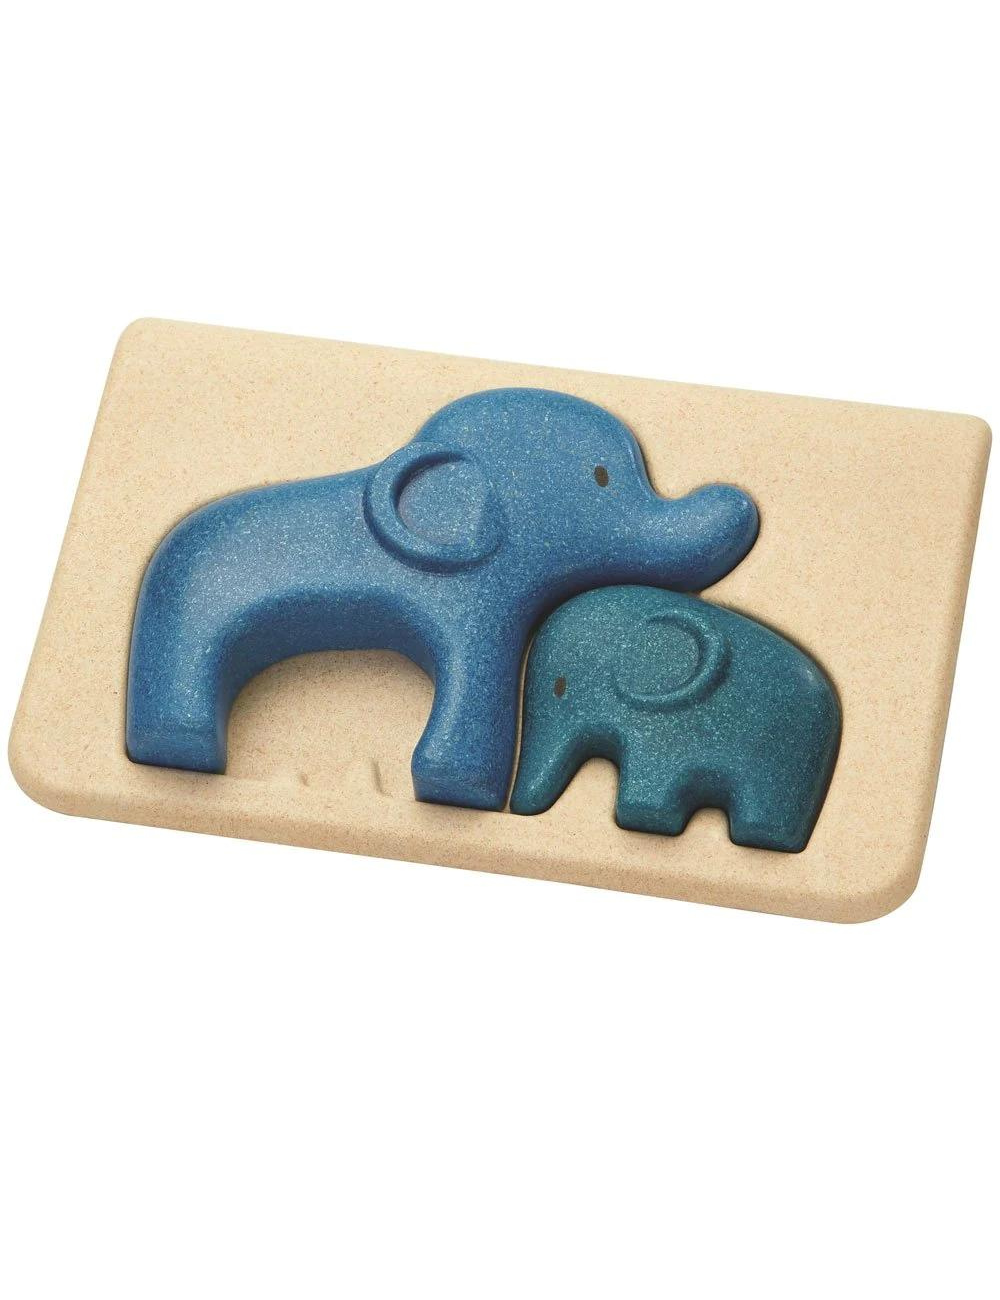 The Plan Toys Elephant Puzzle